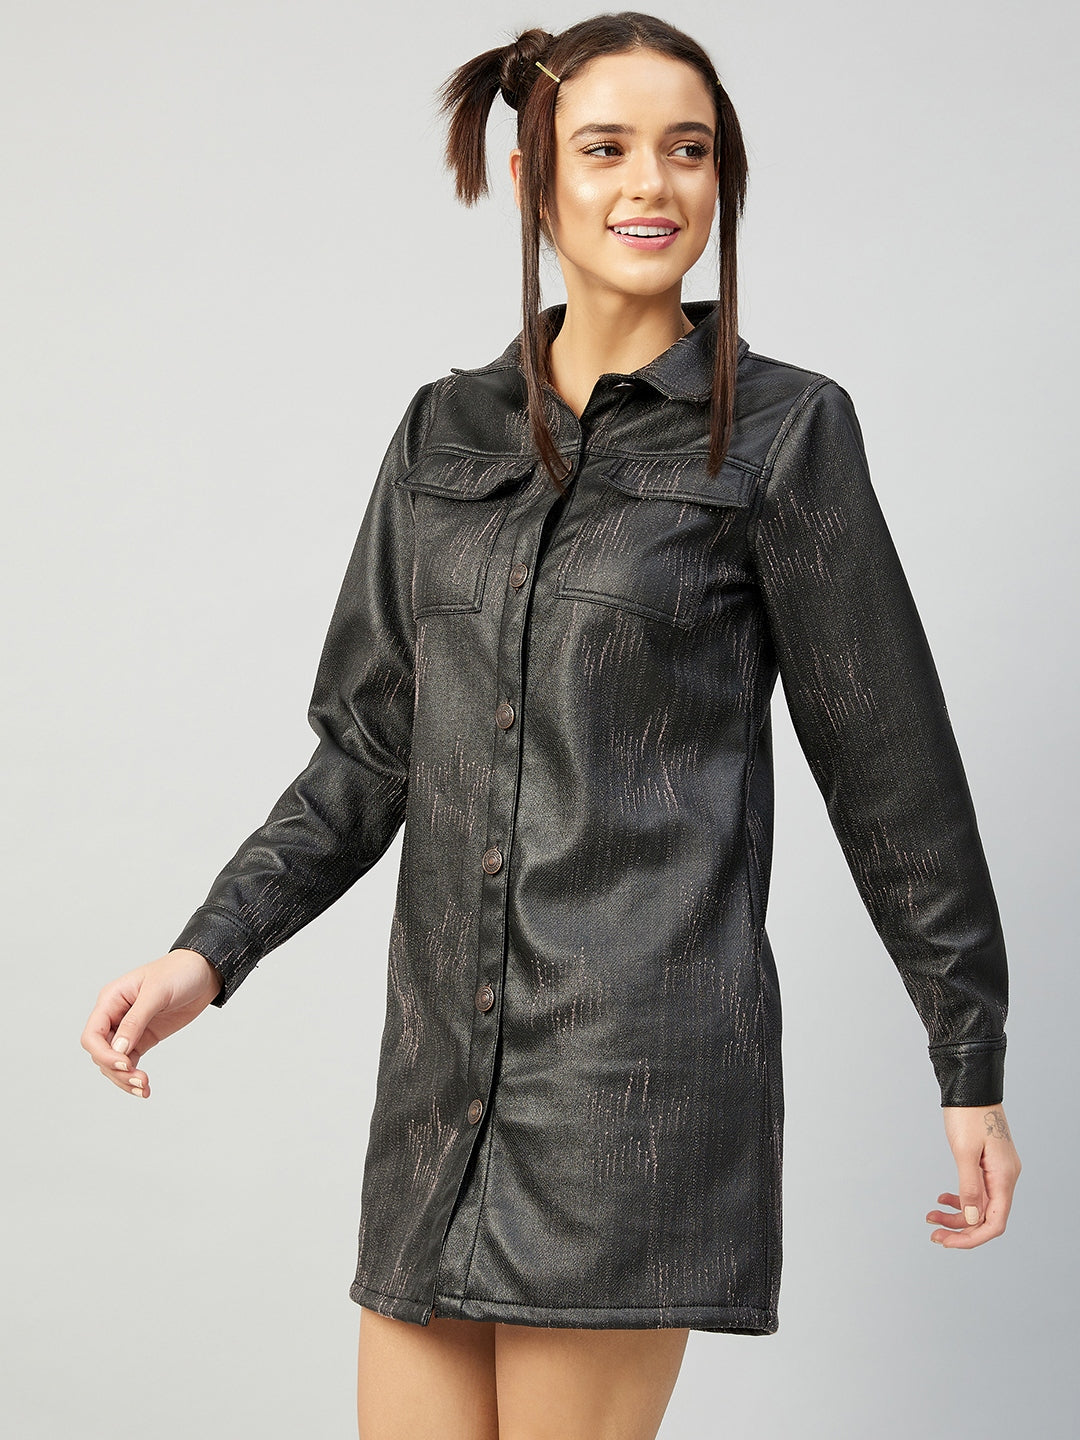 Athena Charcoal Black Leather Shirt Mini Dress - Athena Lifestyle